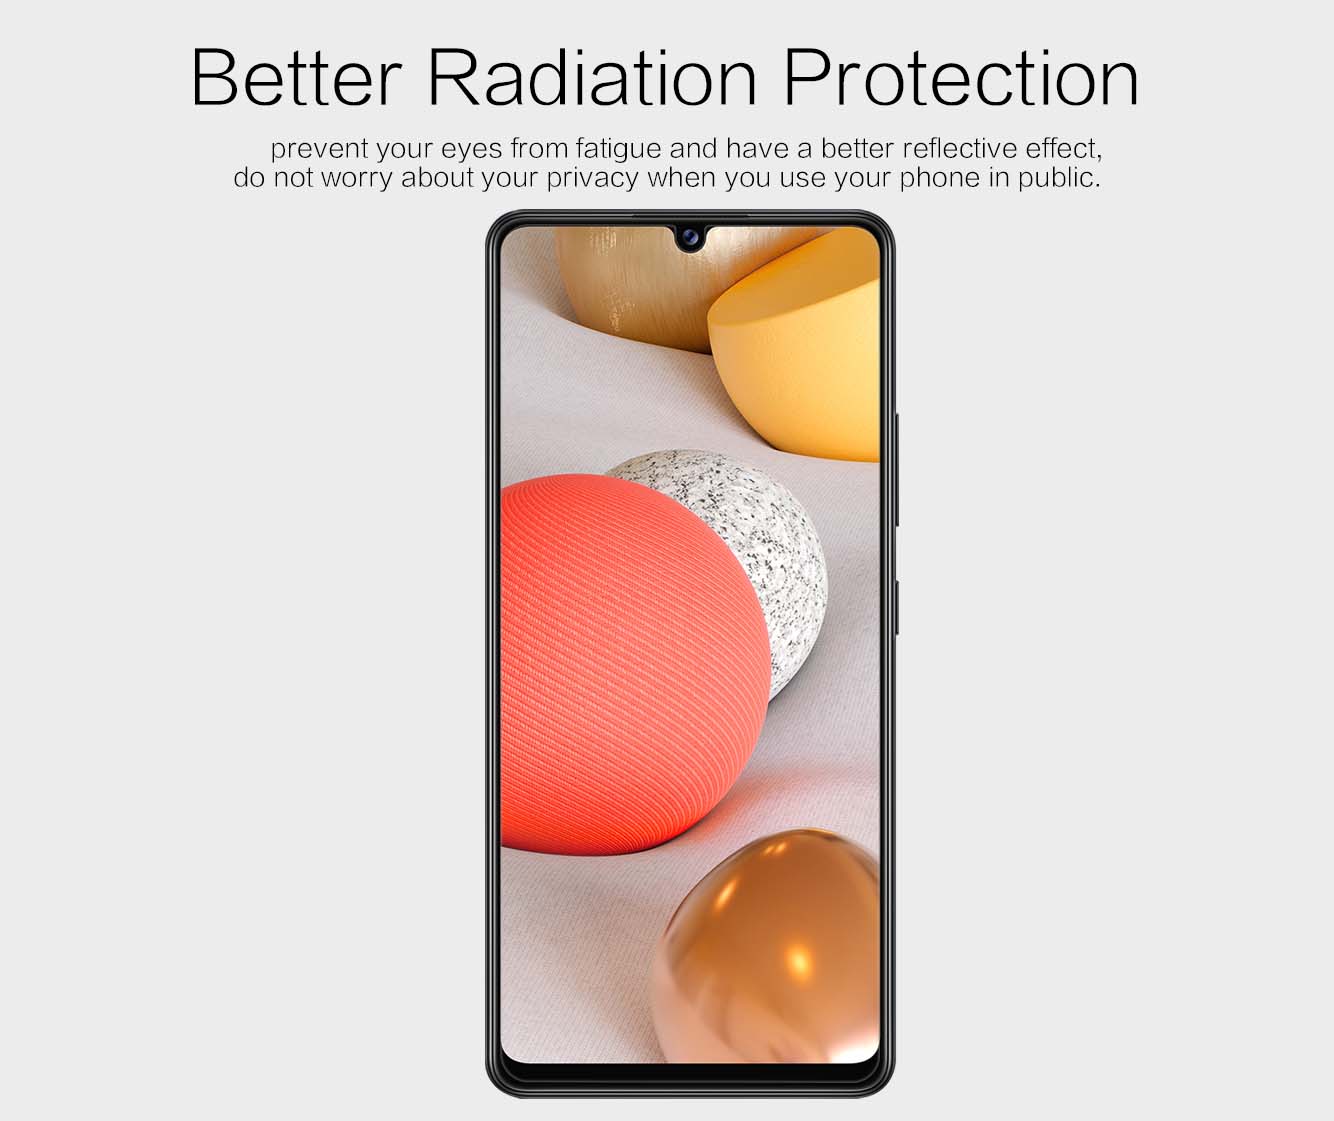 Samsung Galaxy A42 5G screen protector